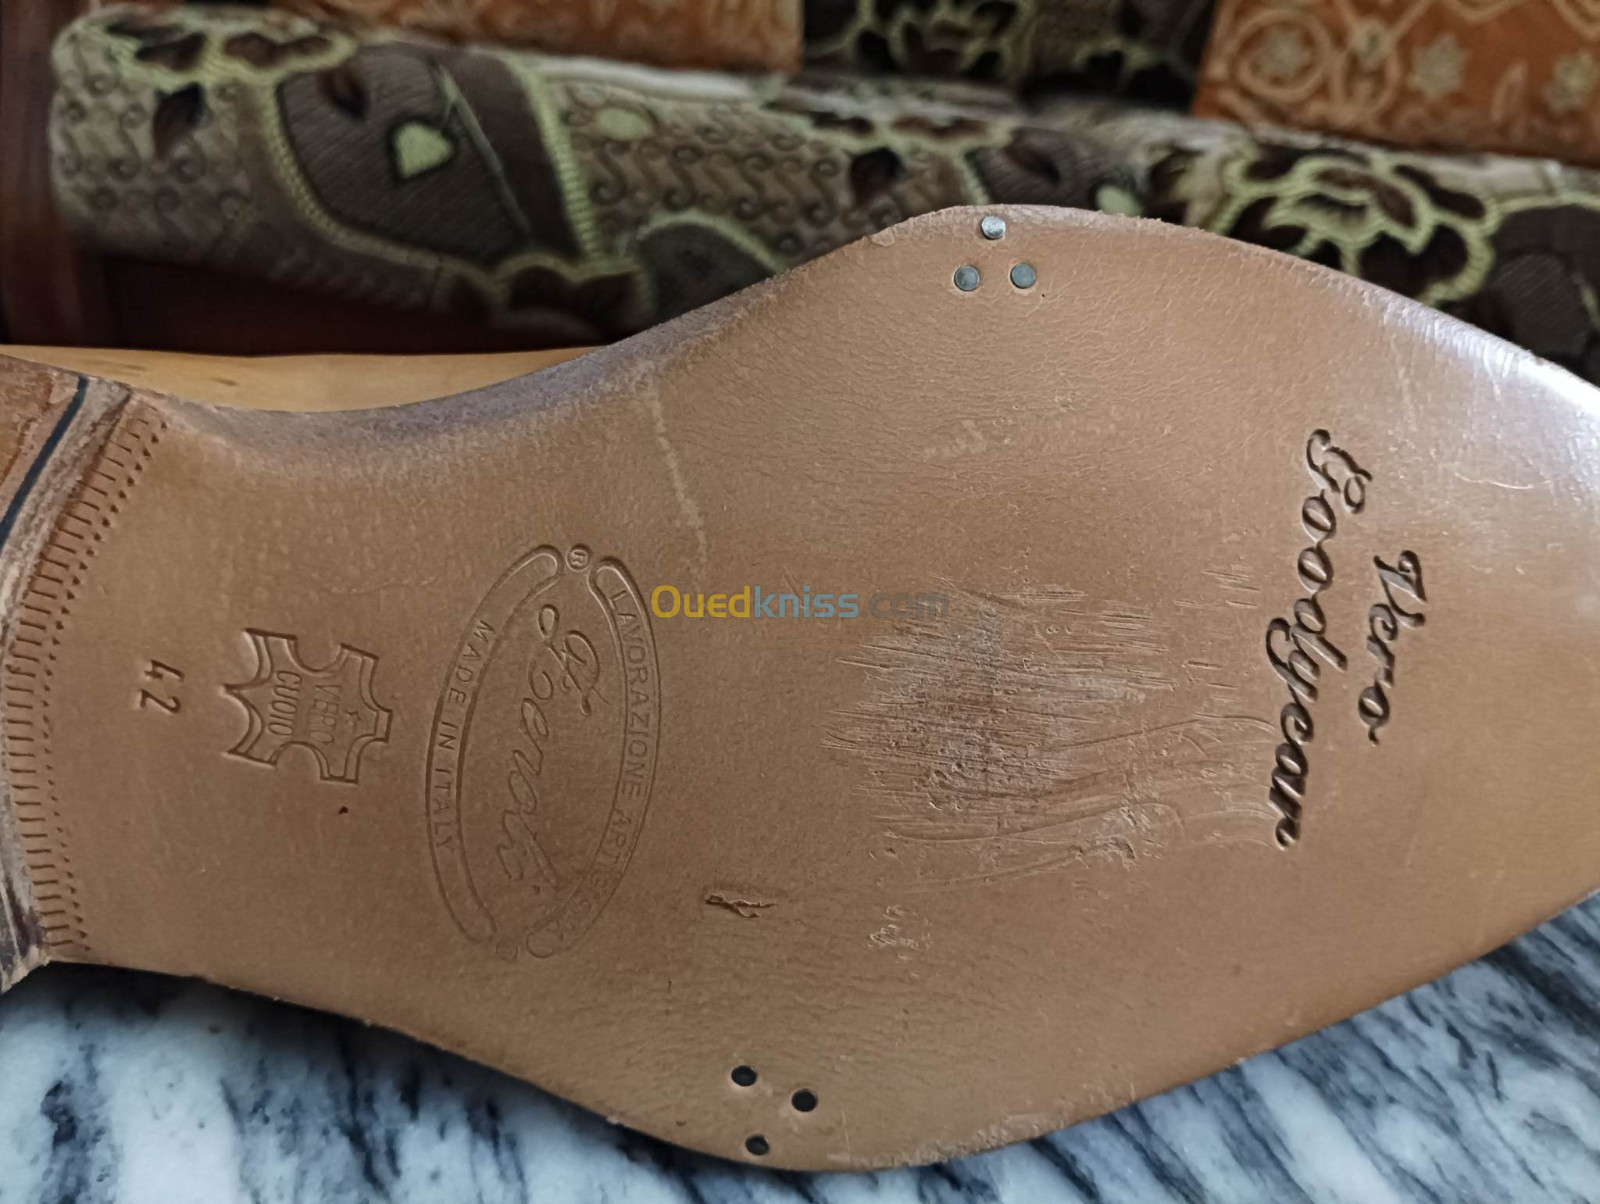 borsalino chaussures made in italy 180euro